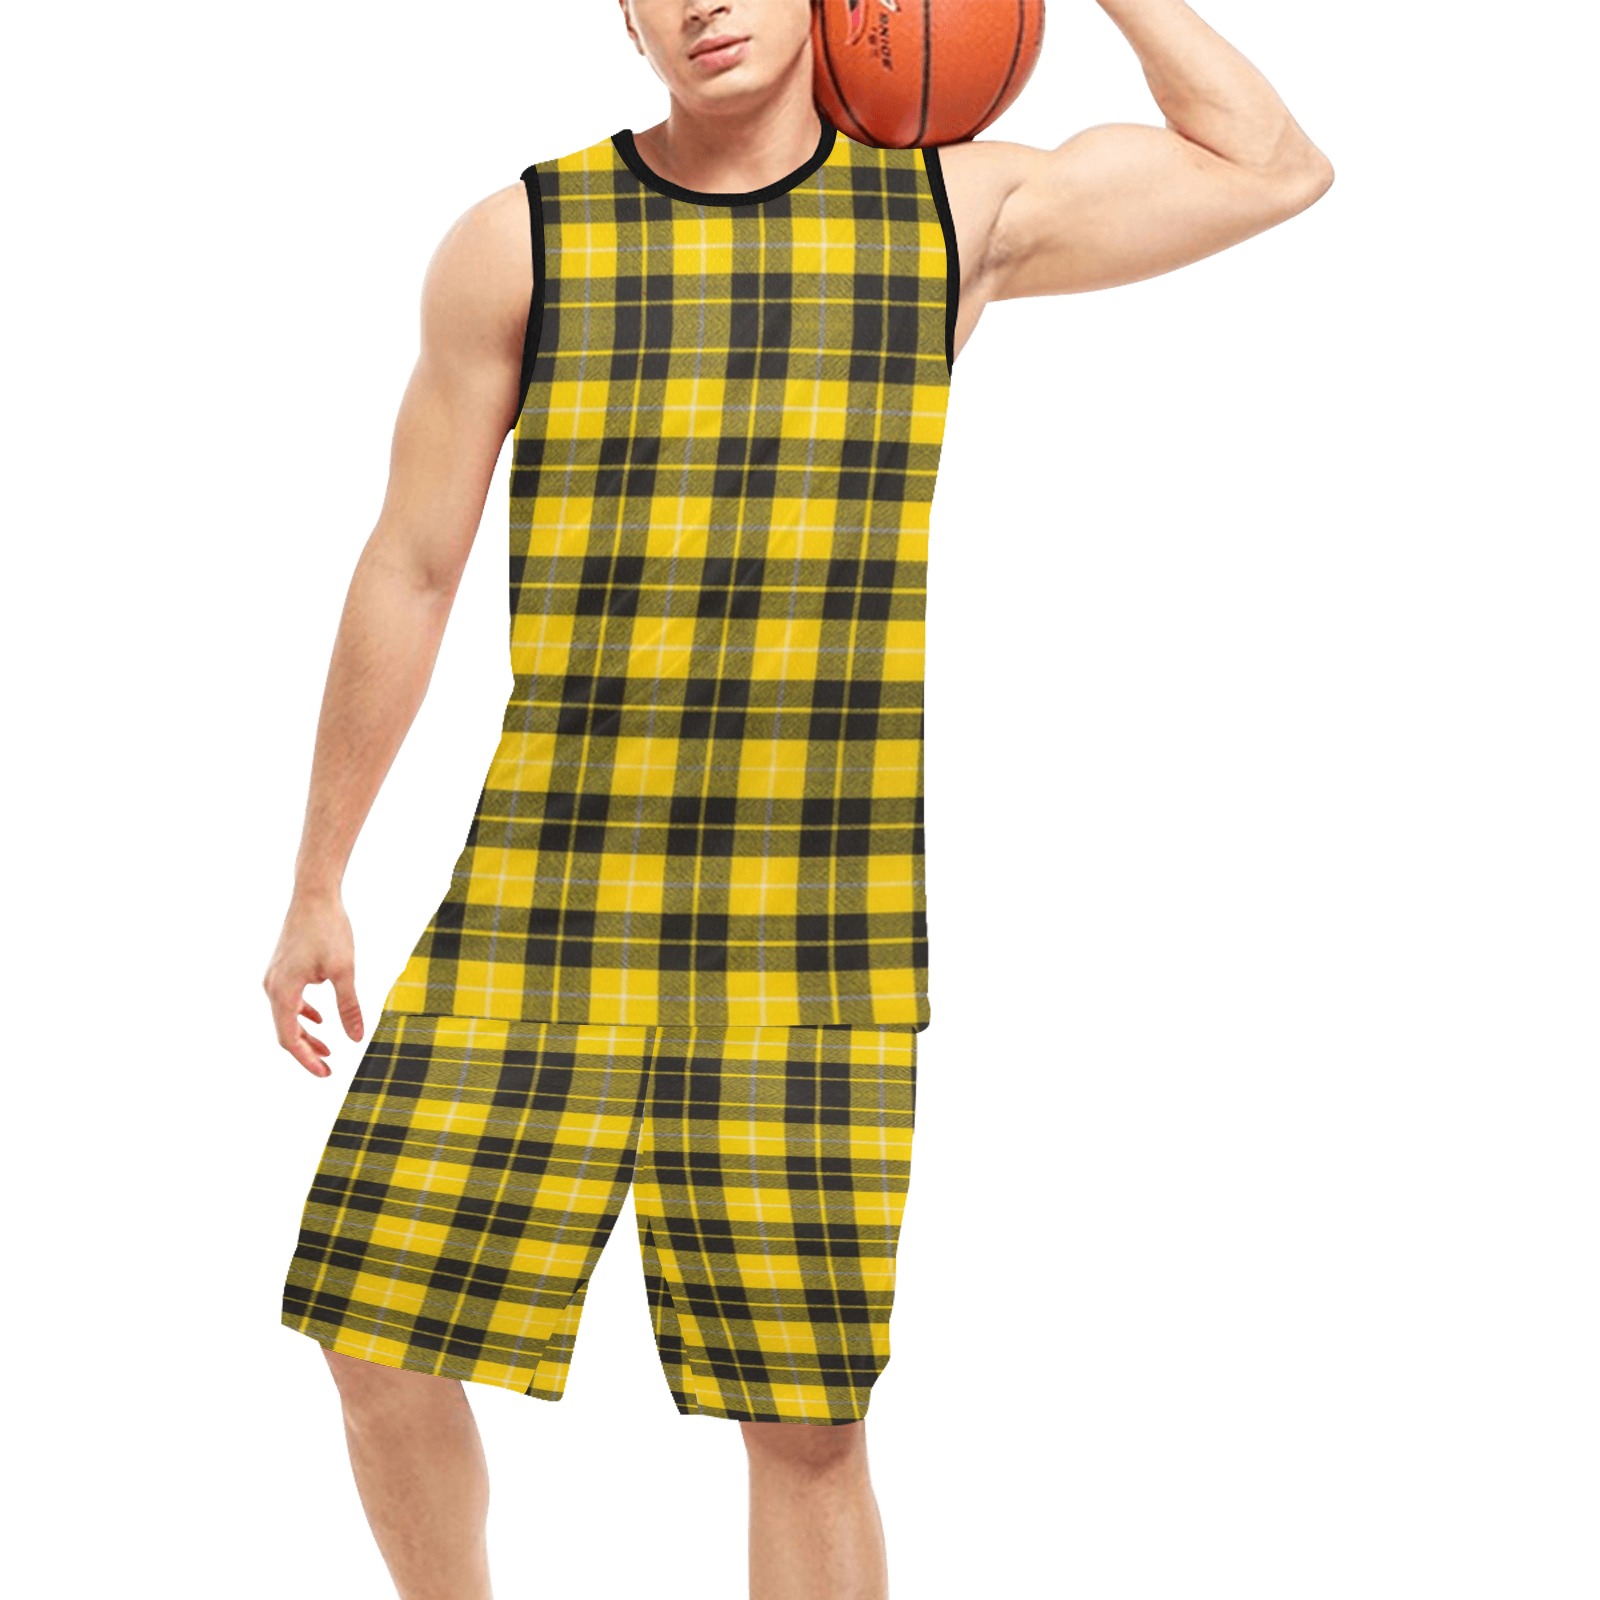 Barclay Dress Modern Basketball Uniform with Pocket